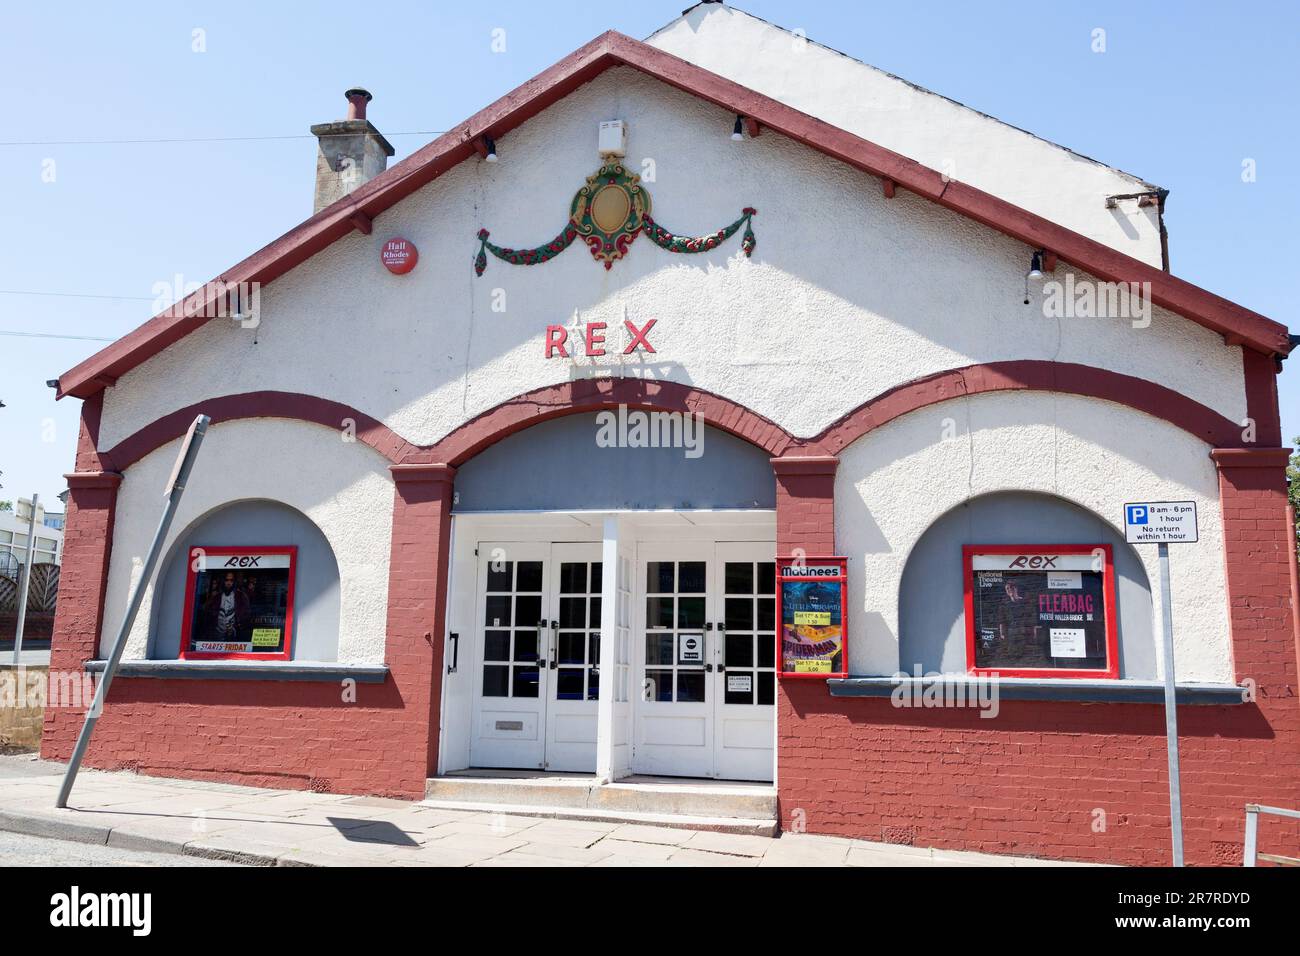 Rex Cinema, Elland, West Yorkshire Stock Photo